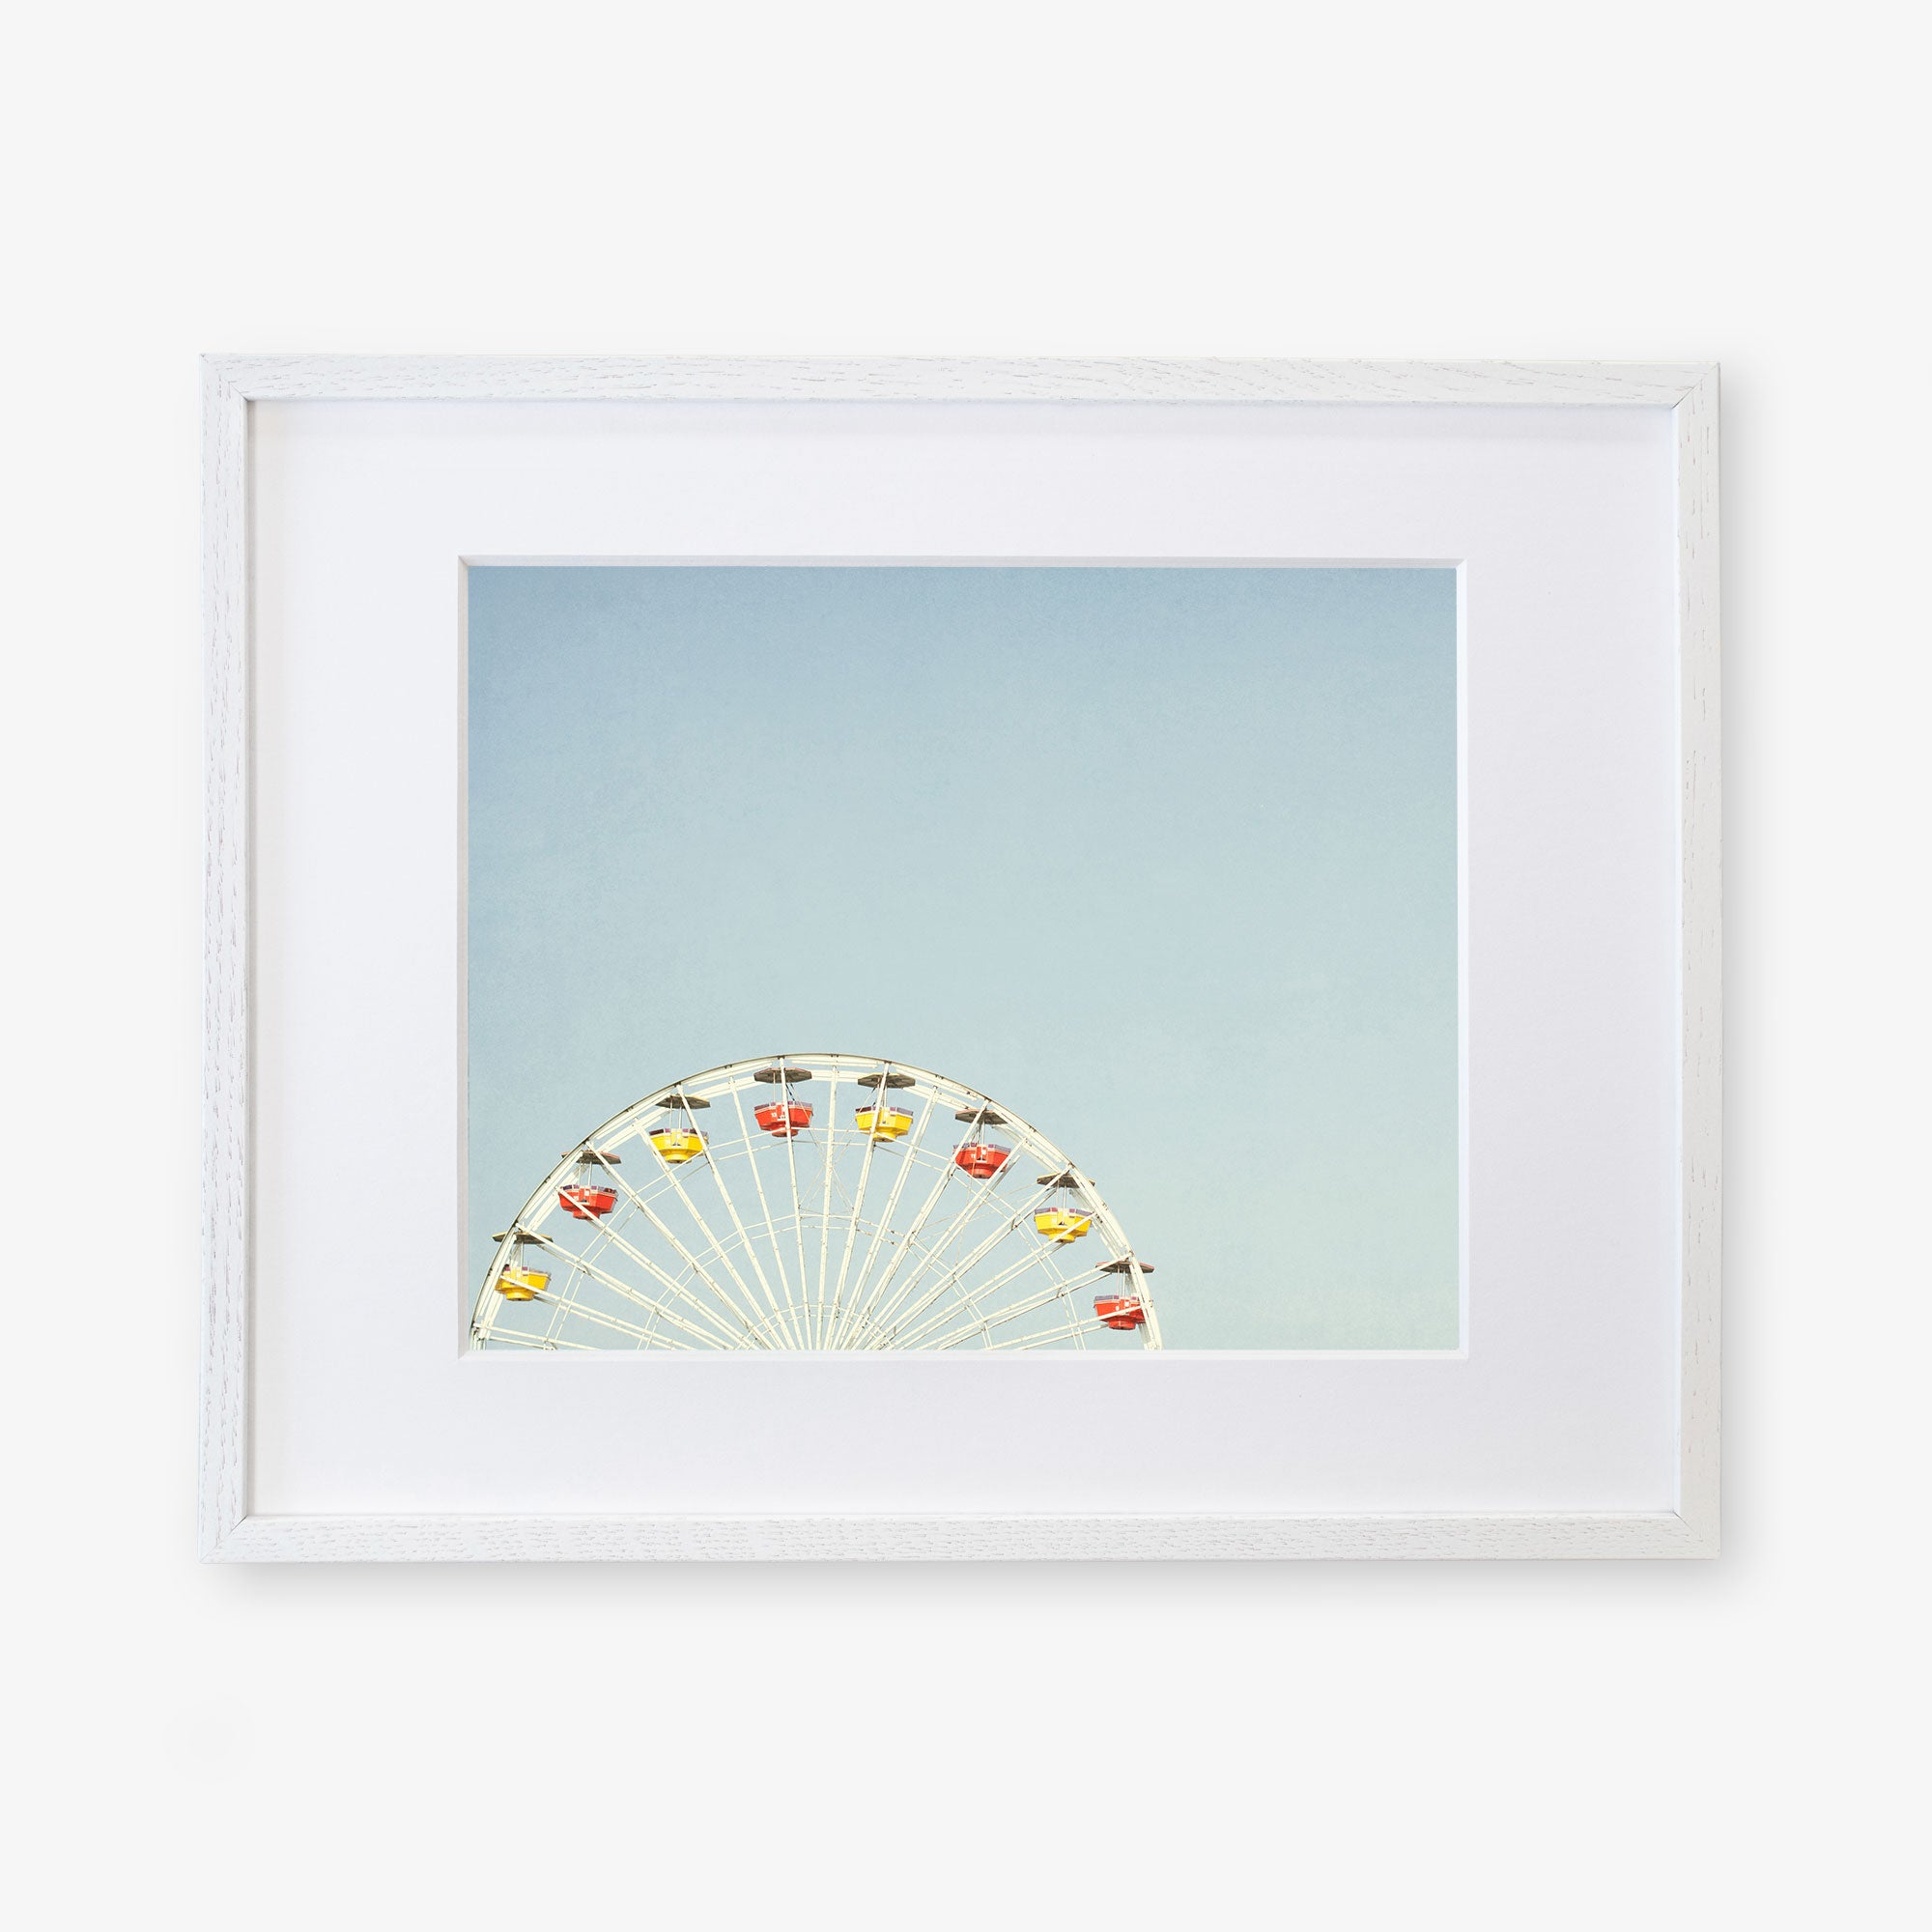 Print of the Santa Monica pier ferris wheel in a white frame